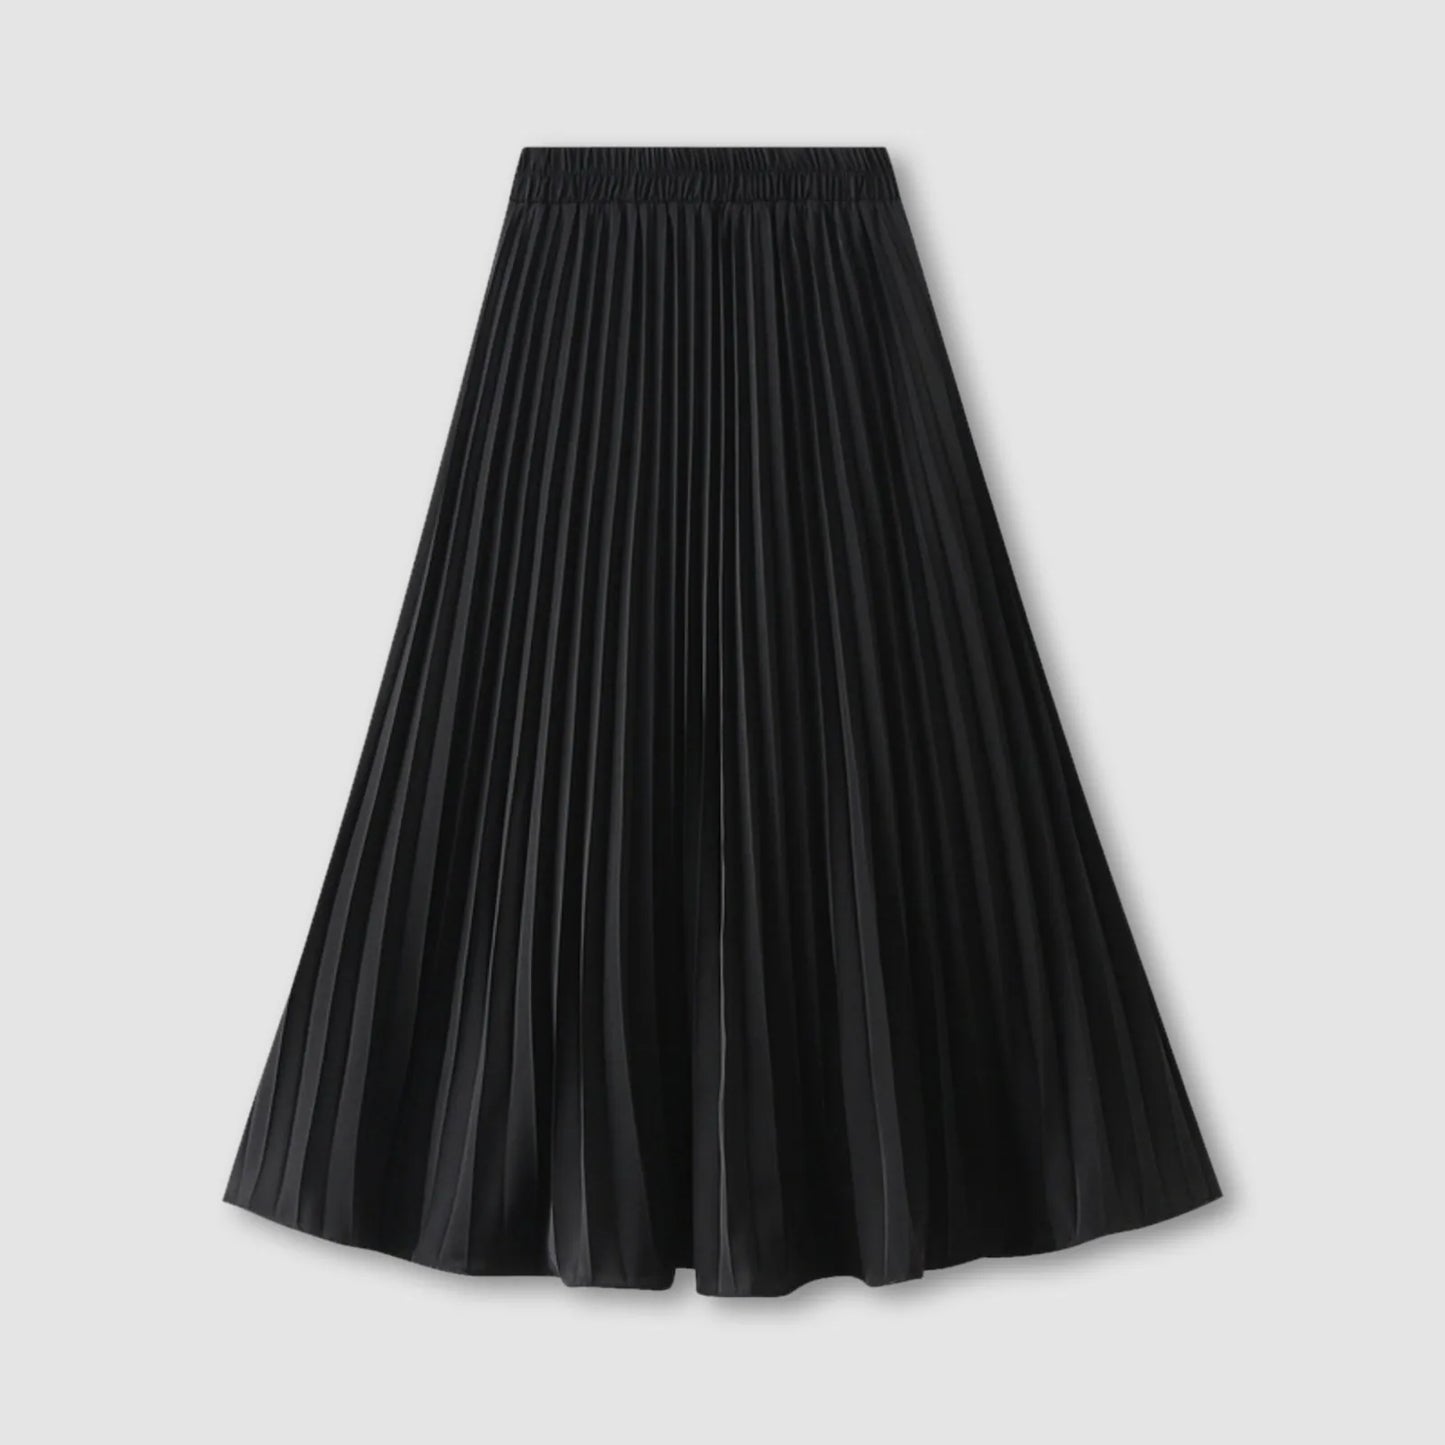 JuliaFashion - Women's Pleated Skirt Spring Summer Elastic Waist Slim Long A Line Skirt Double Layer Chiffon Skirts Solid Midi Pleated Skirt Dress